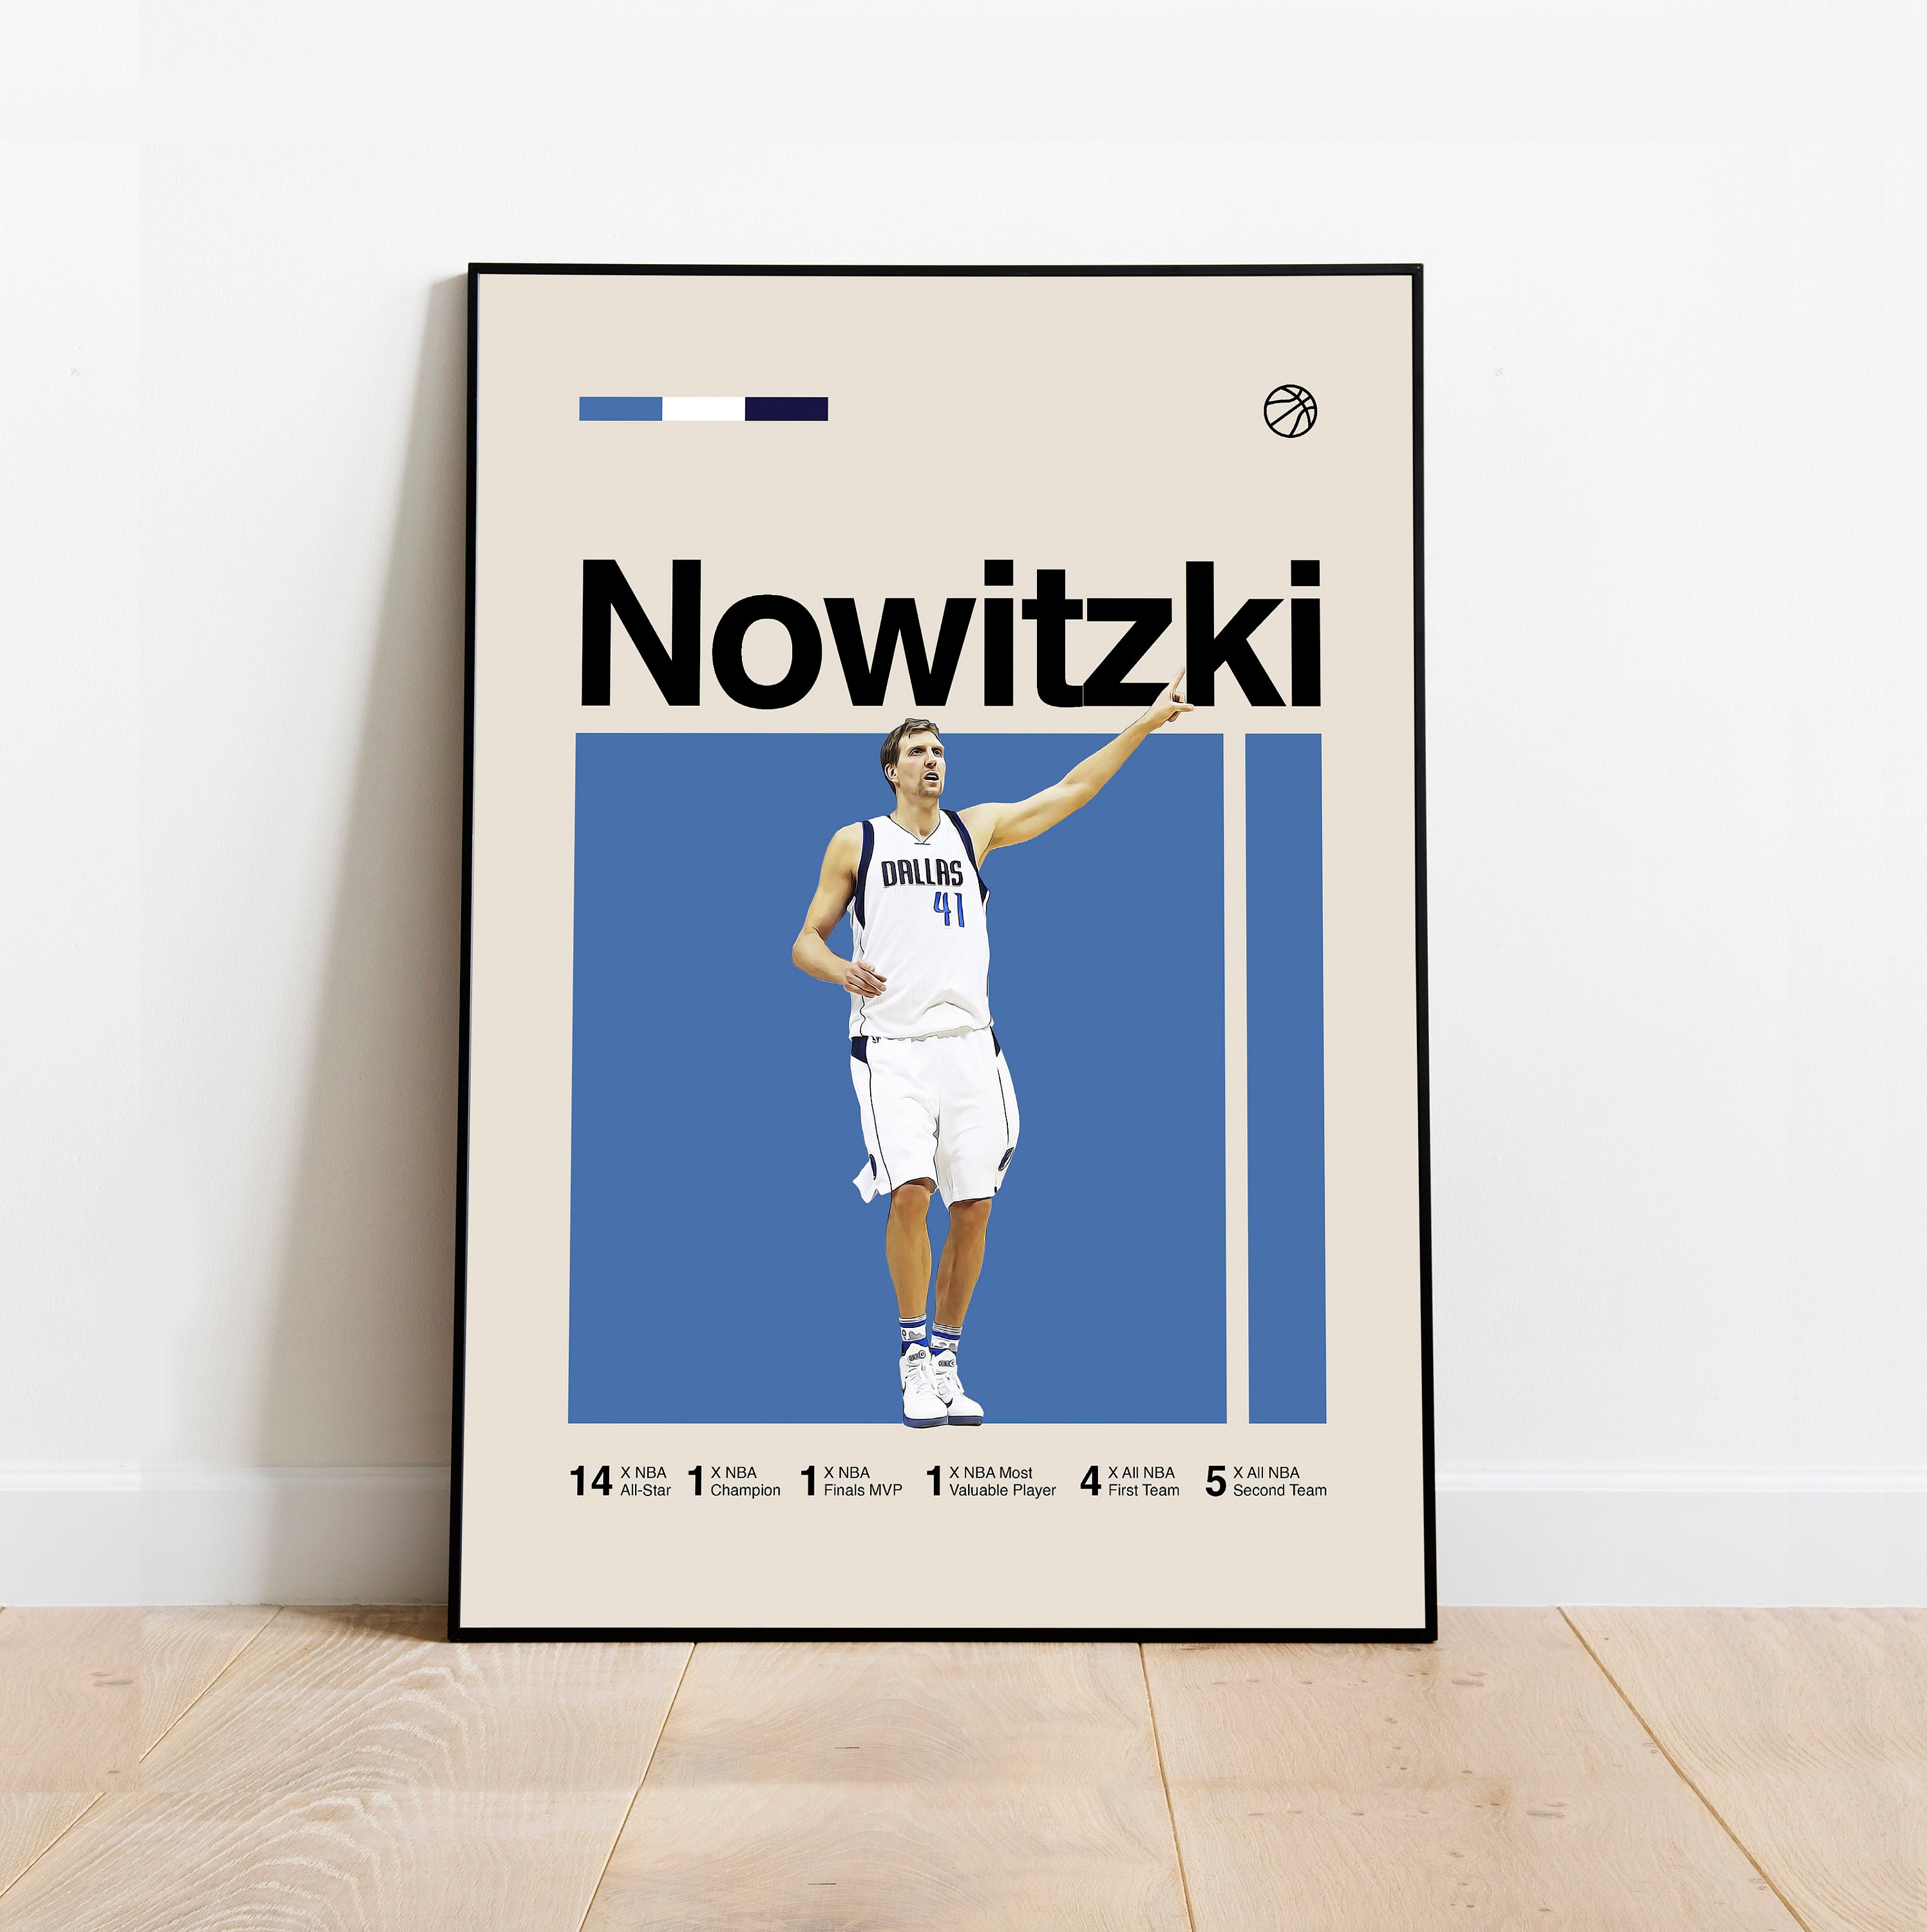 Vintage RARE NBA Reebok Jersey Dallas Mavericks ALL-STAR Dirk Nowitzki Xl  #41